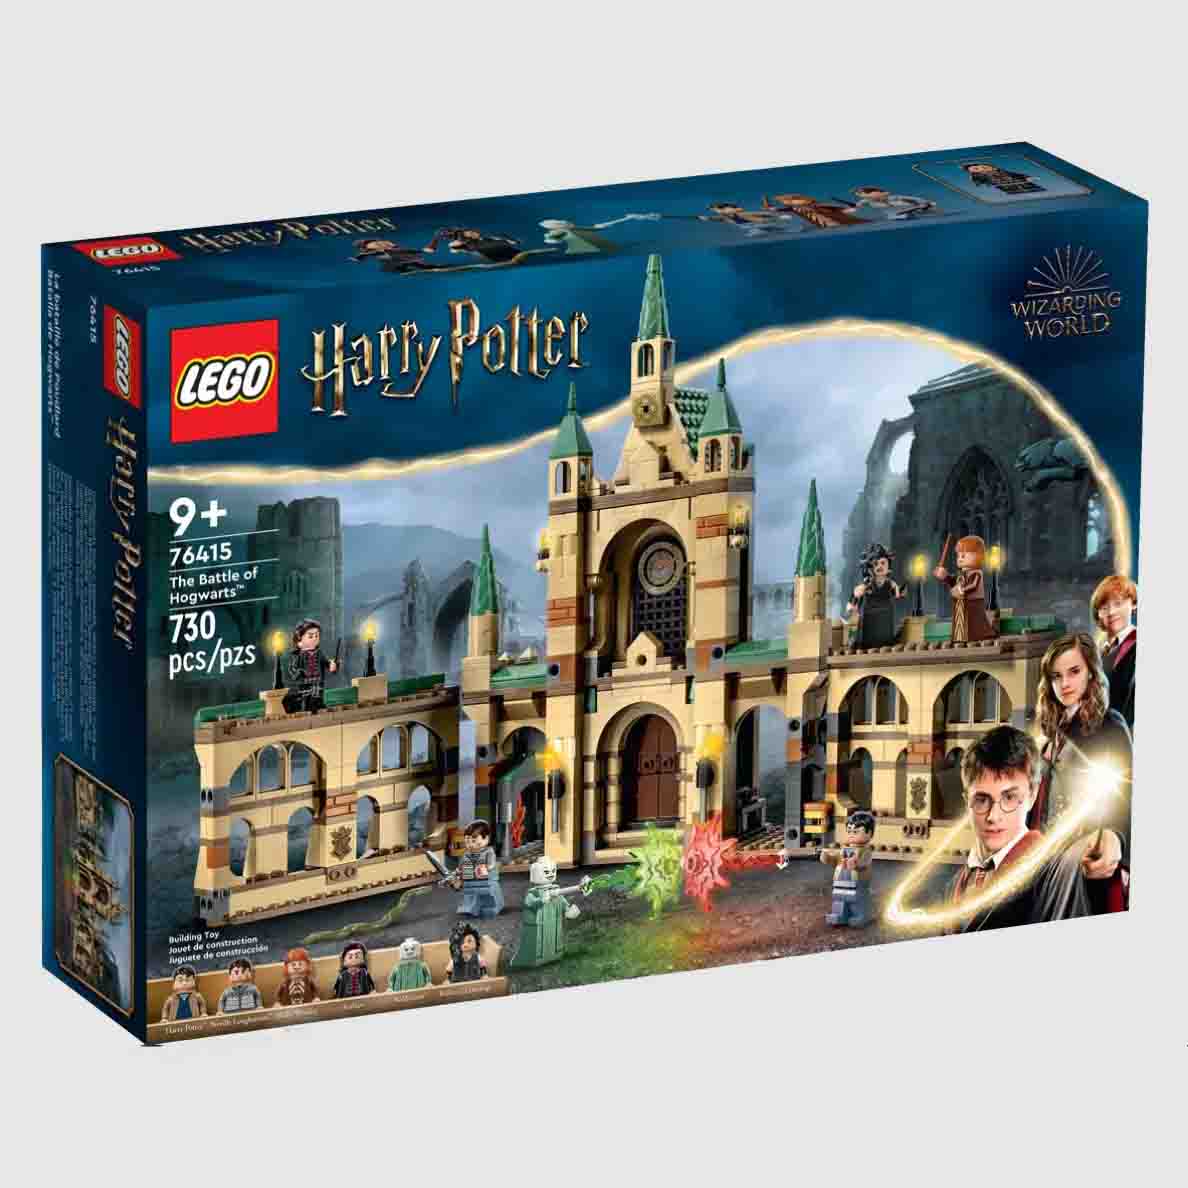 Harry Potter LEGO set in packaging